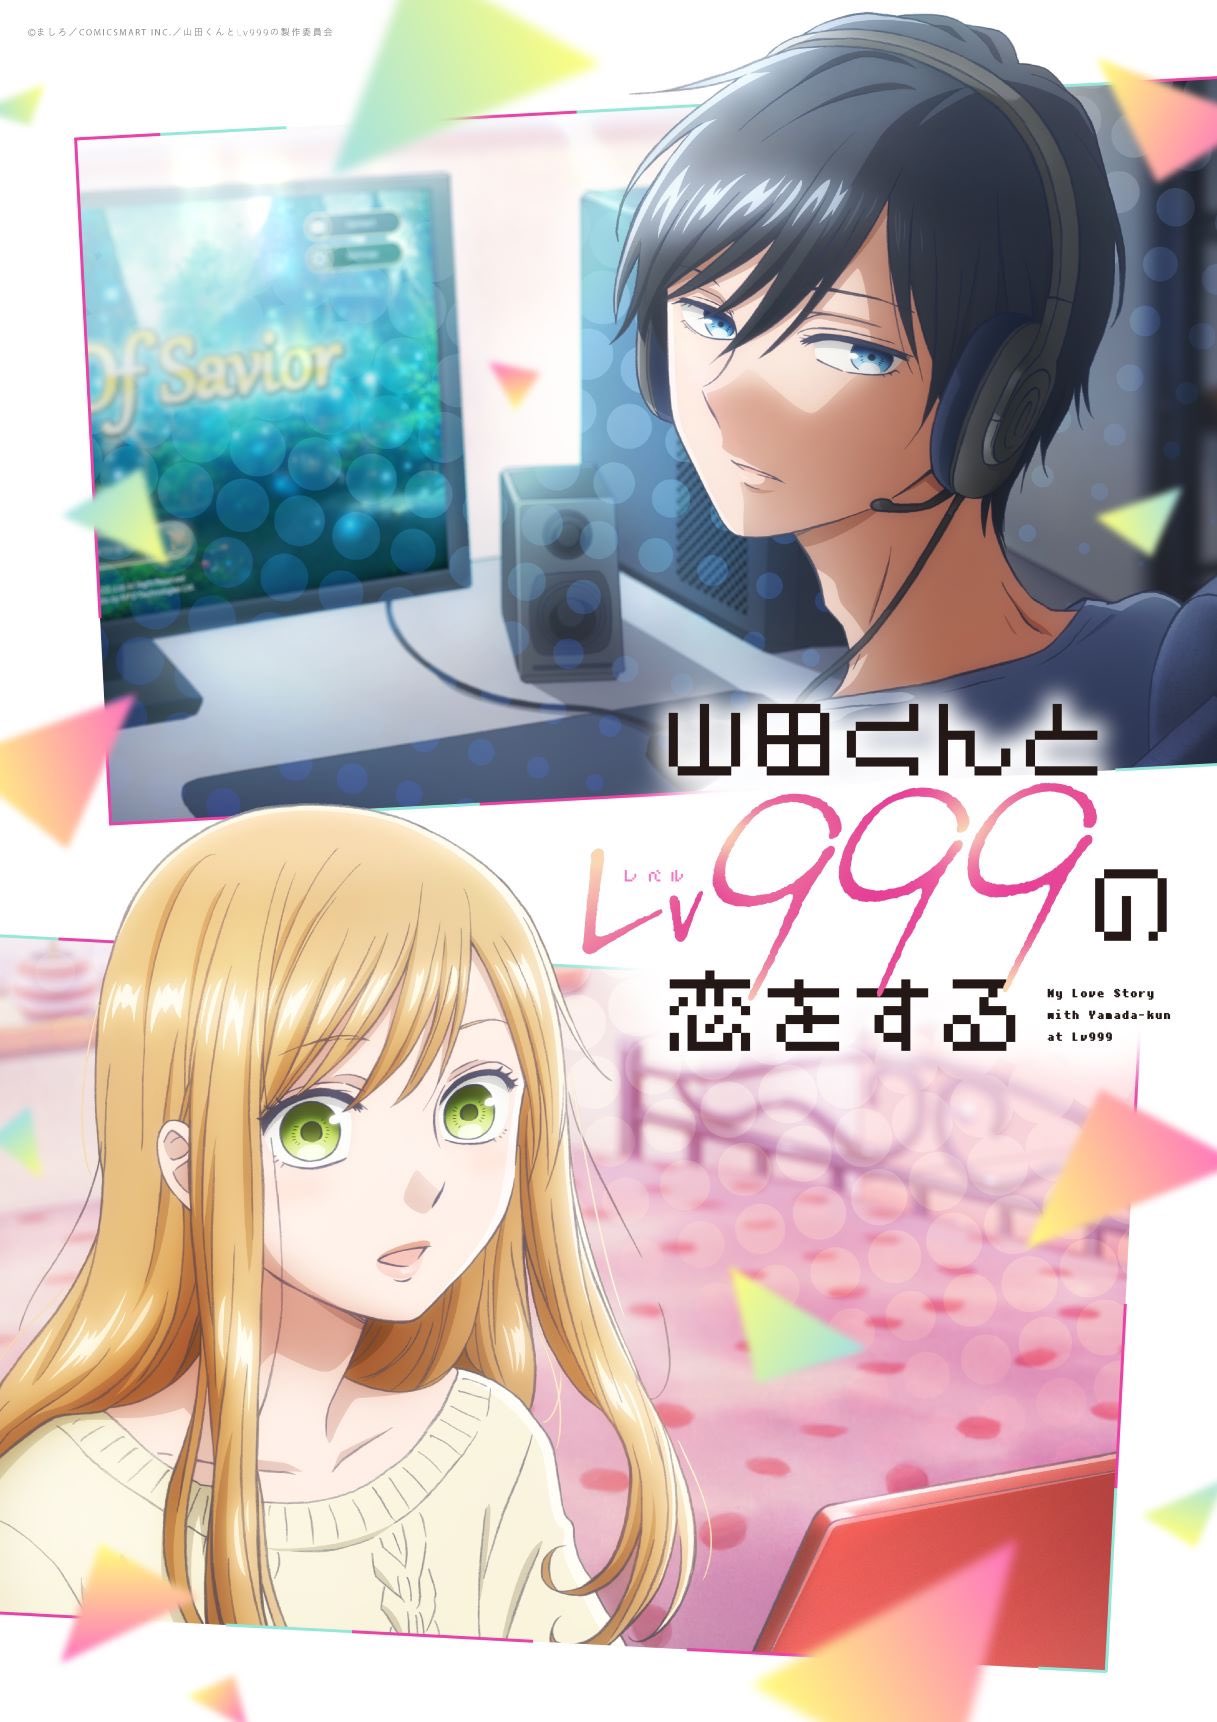 Romance anime 2023 - My Love Story With Yamada-kun At Lv999